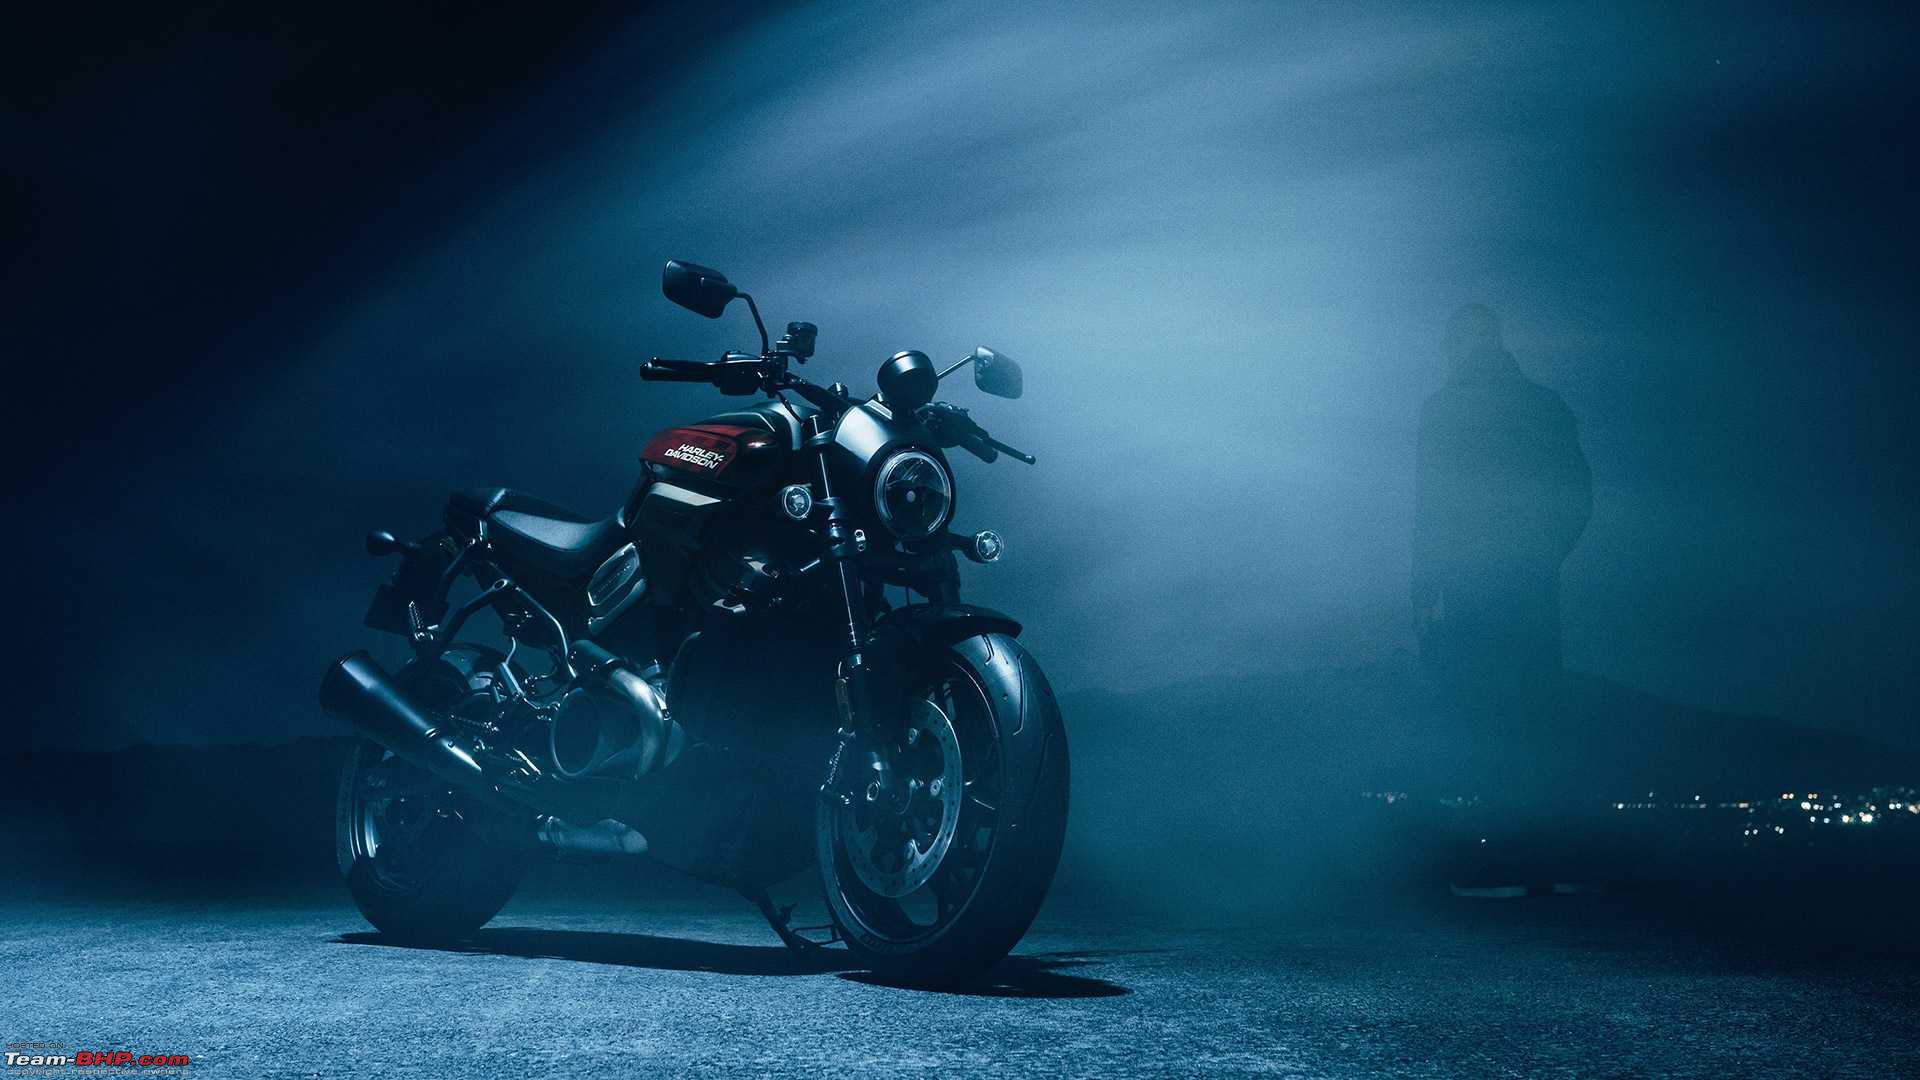 2020 Harley-Davidson Bronx | Top Speed